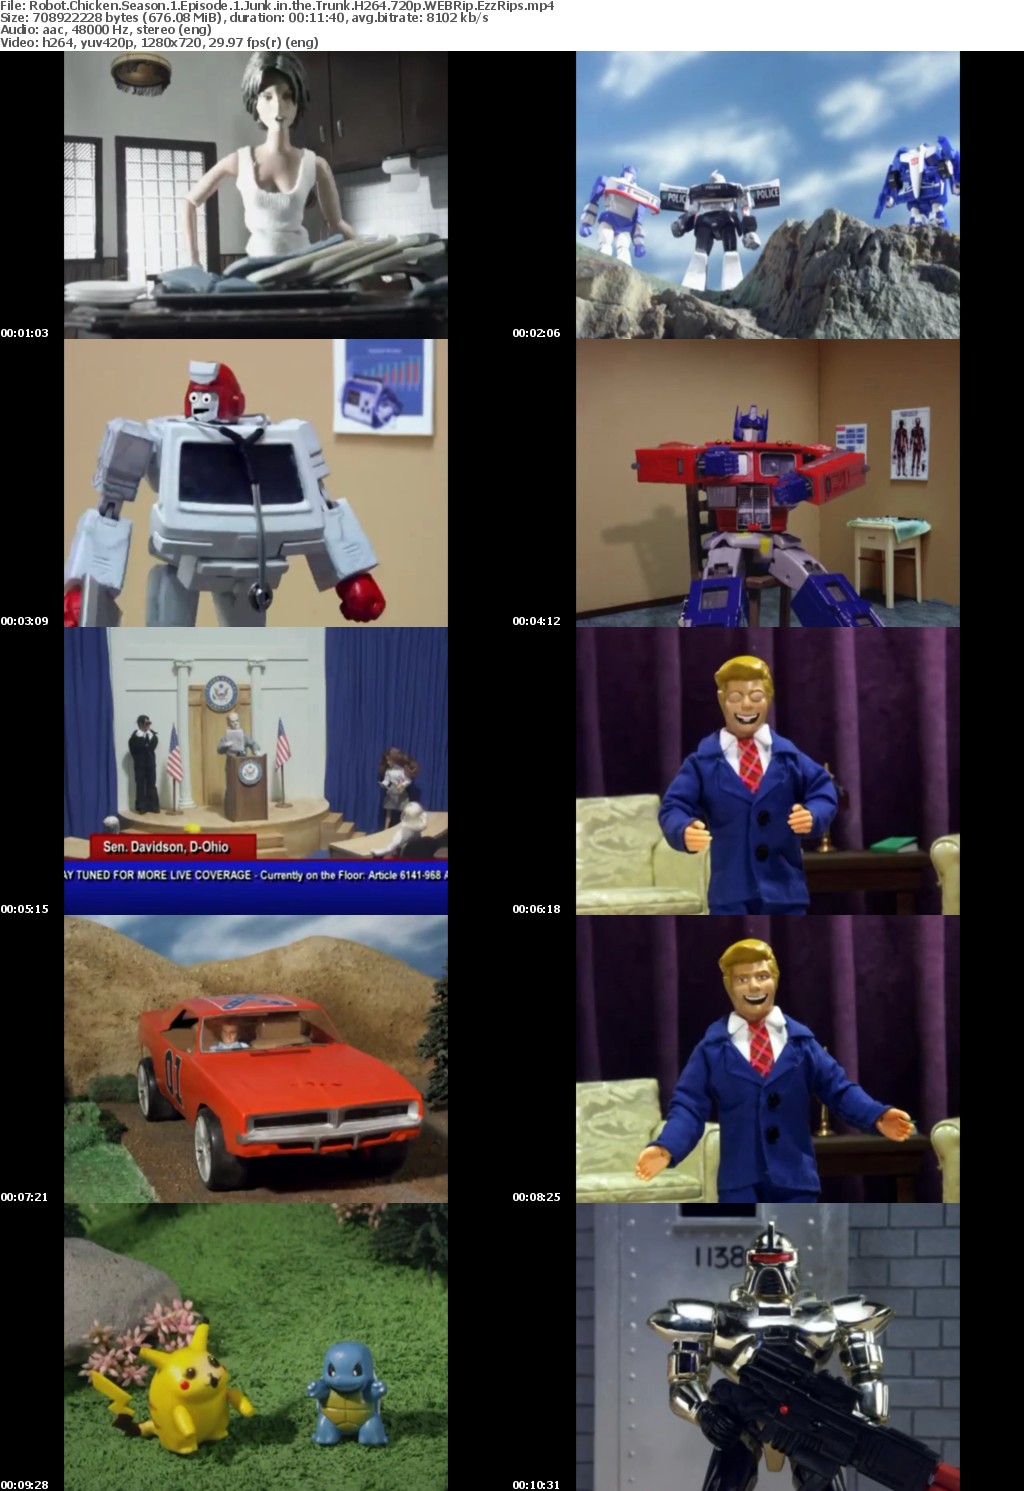 Robot Chicken Season 1 Episode 1 Junk in the Trunk H264 720p WEBRip EzzRips